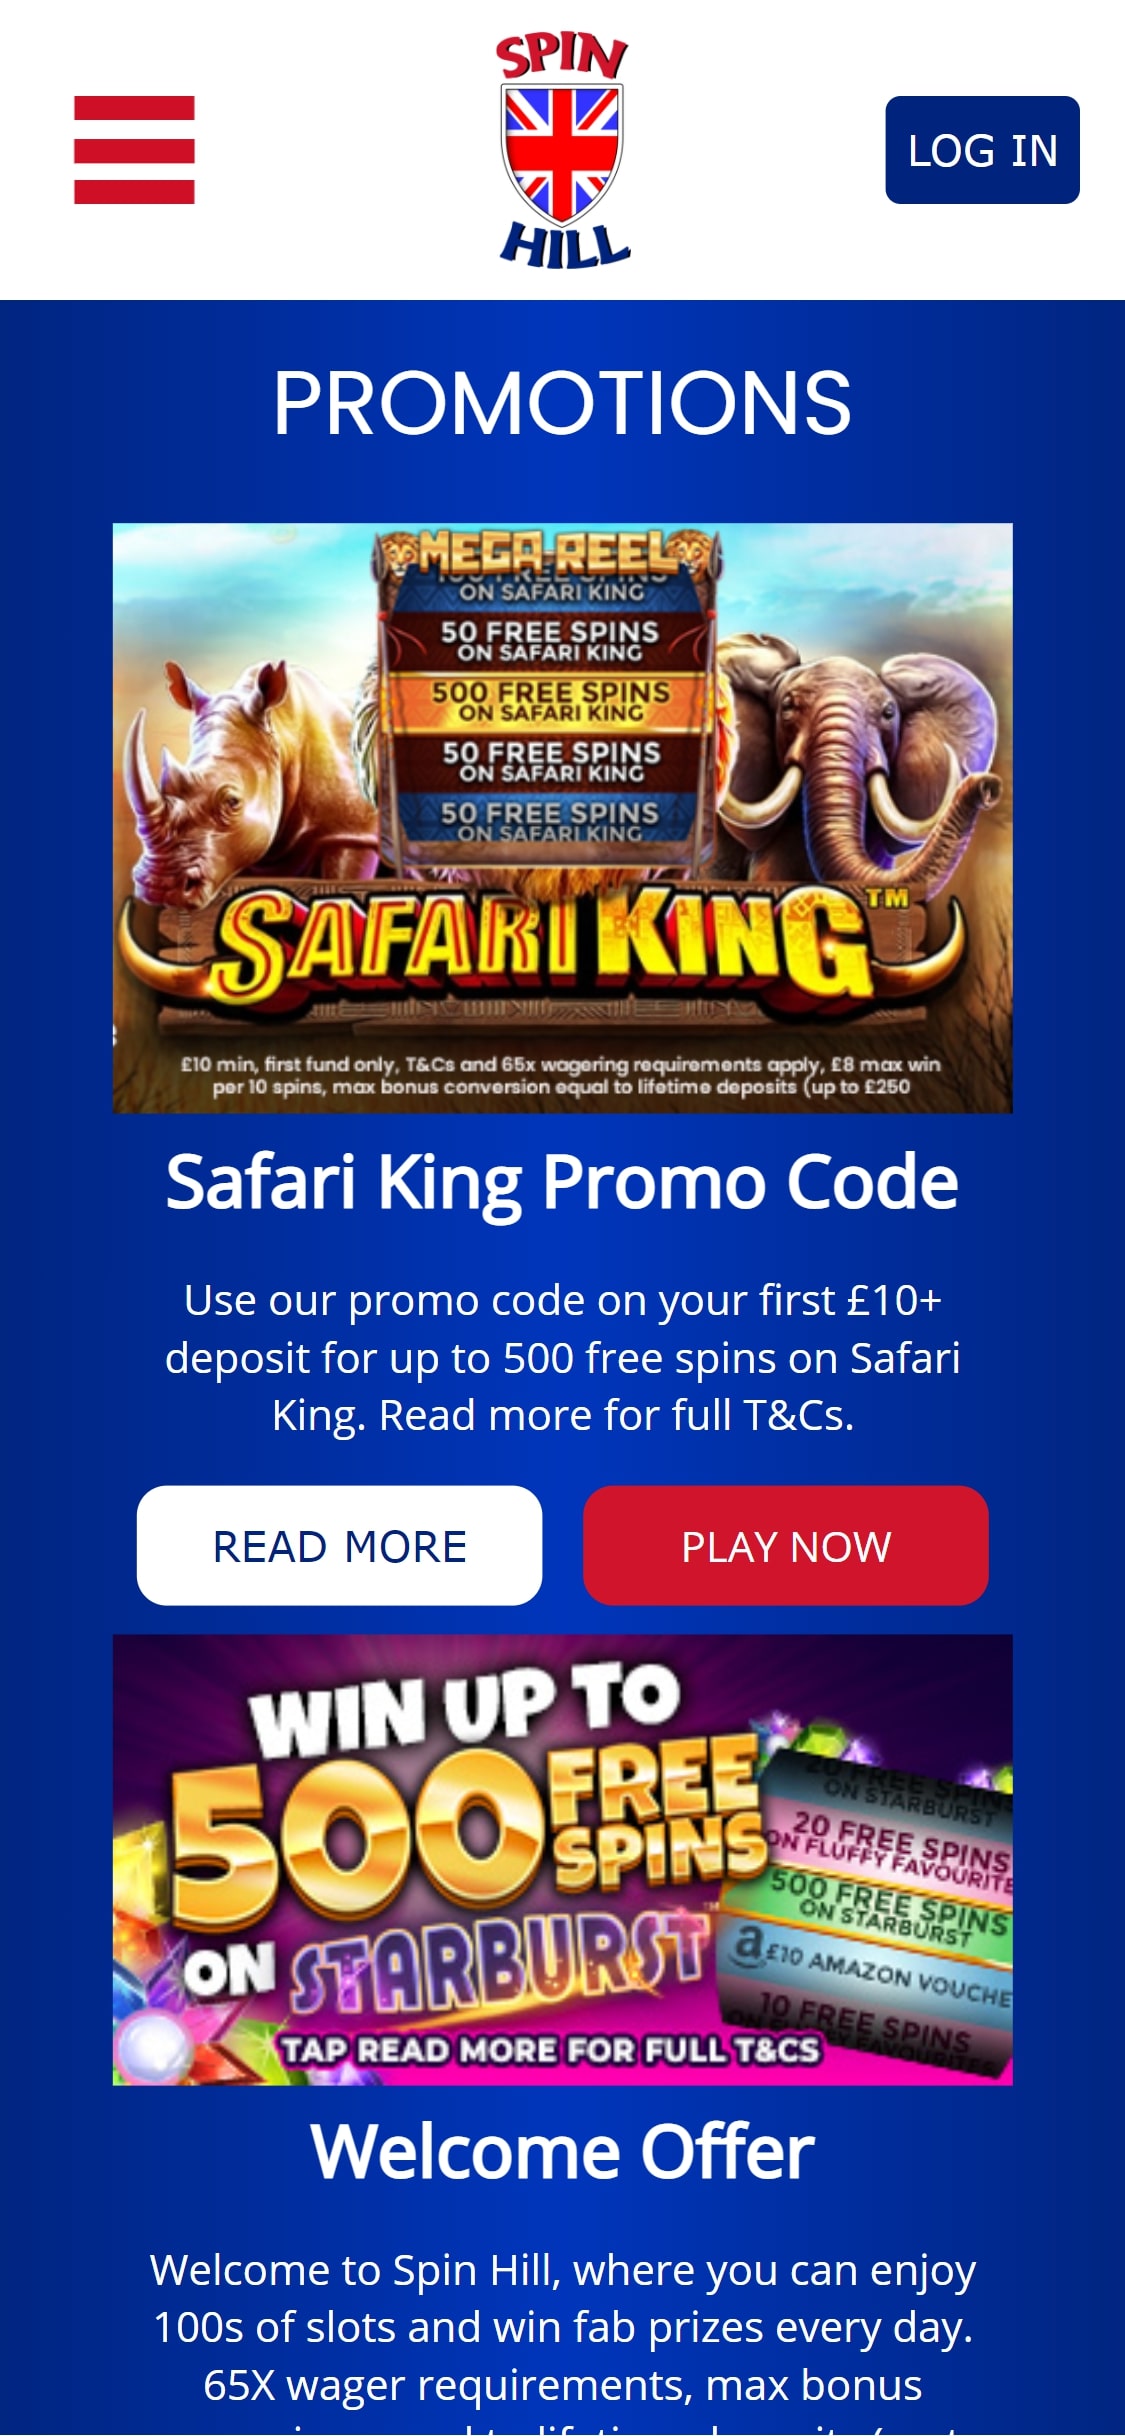 Spin Hill Casino Mobile No Deposit Bonus Review